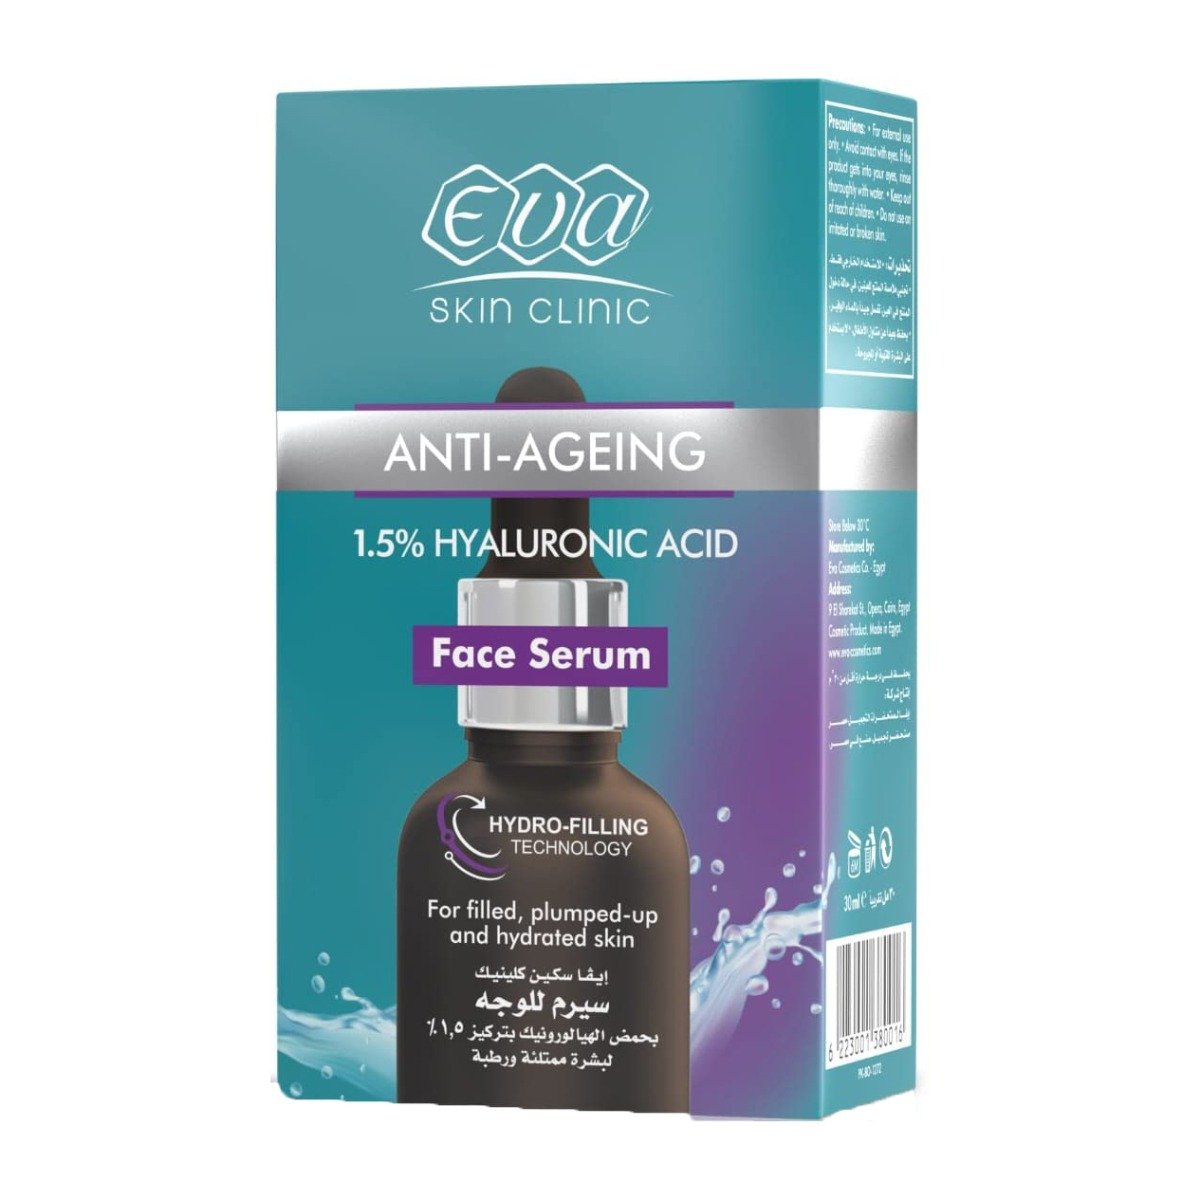 Eva Anti-Ageing 1.5% Hyaluronic Acid Face Serum – 30ml - Bloom Pharmacy